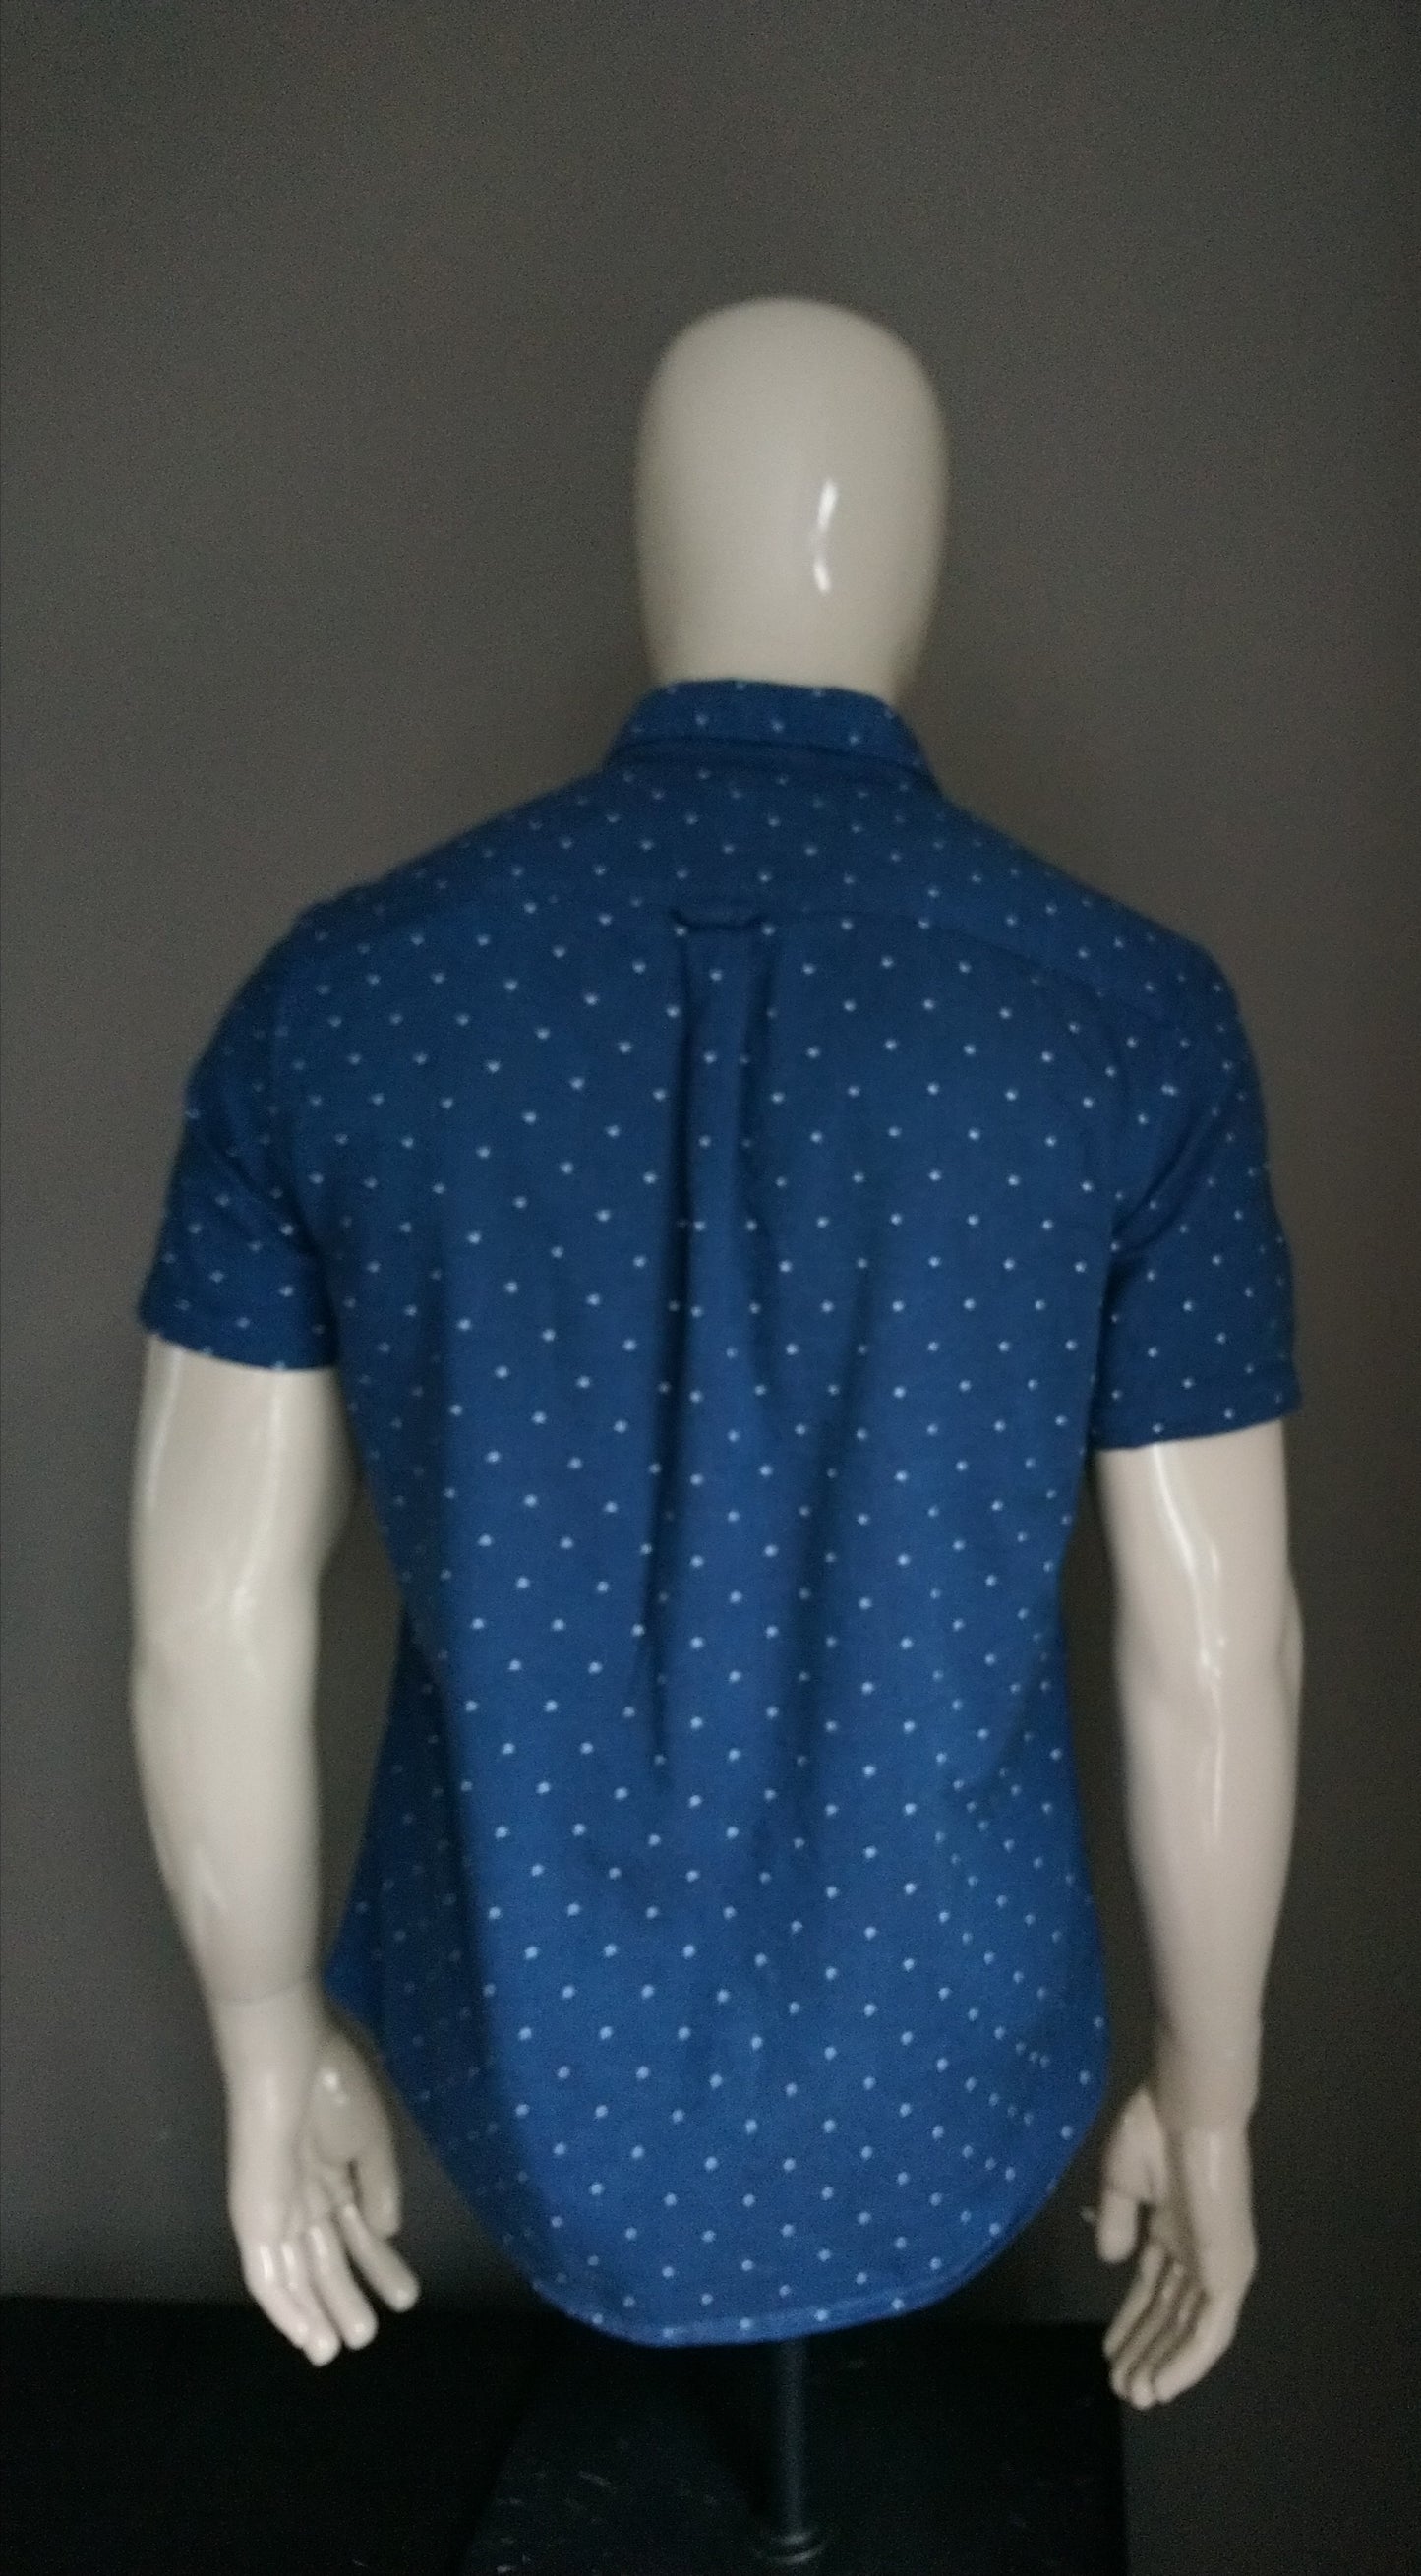 Burton Menswear Shirt Short Sleeve. Impression blanche bleue. Taille M.